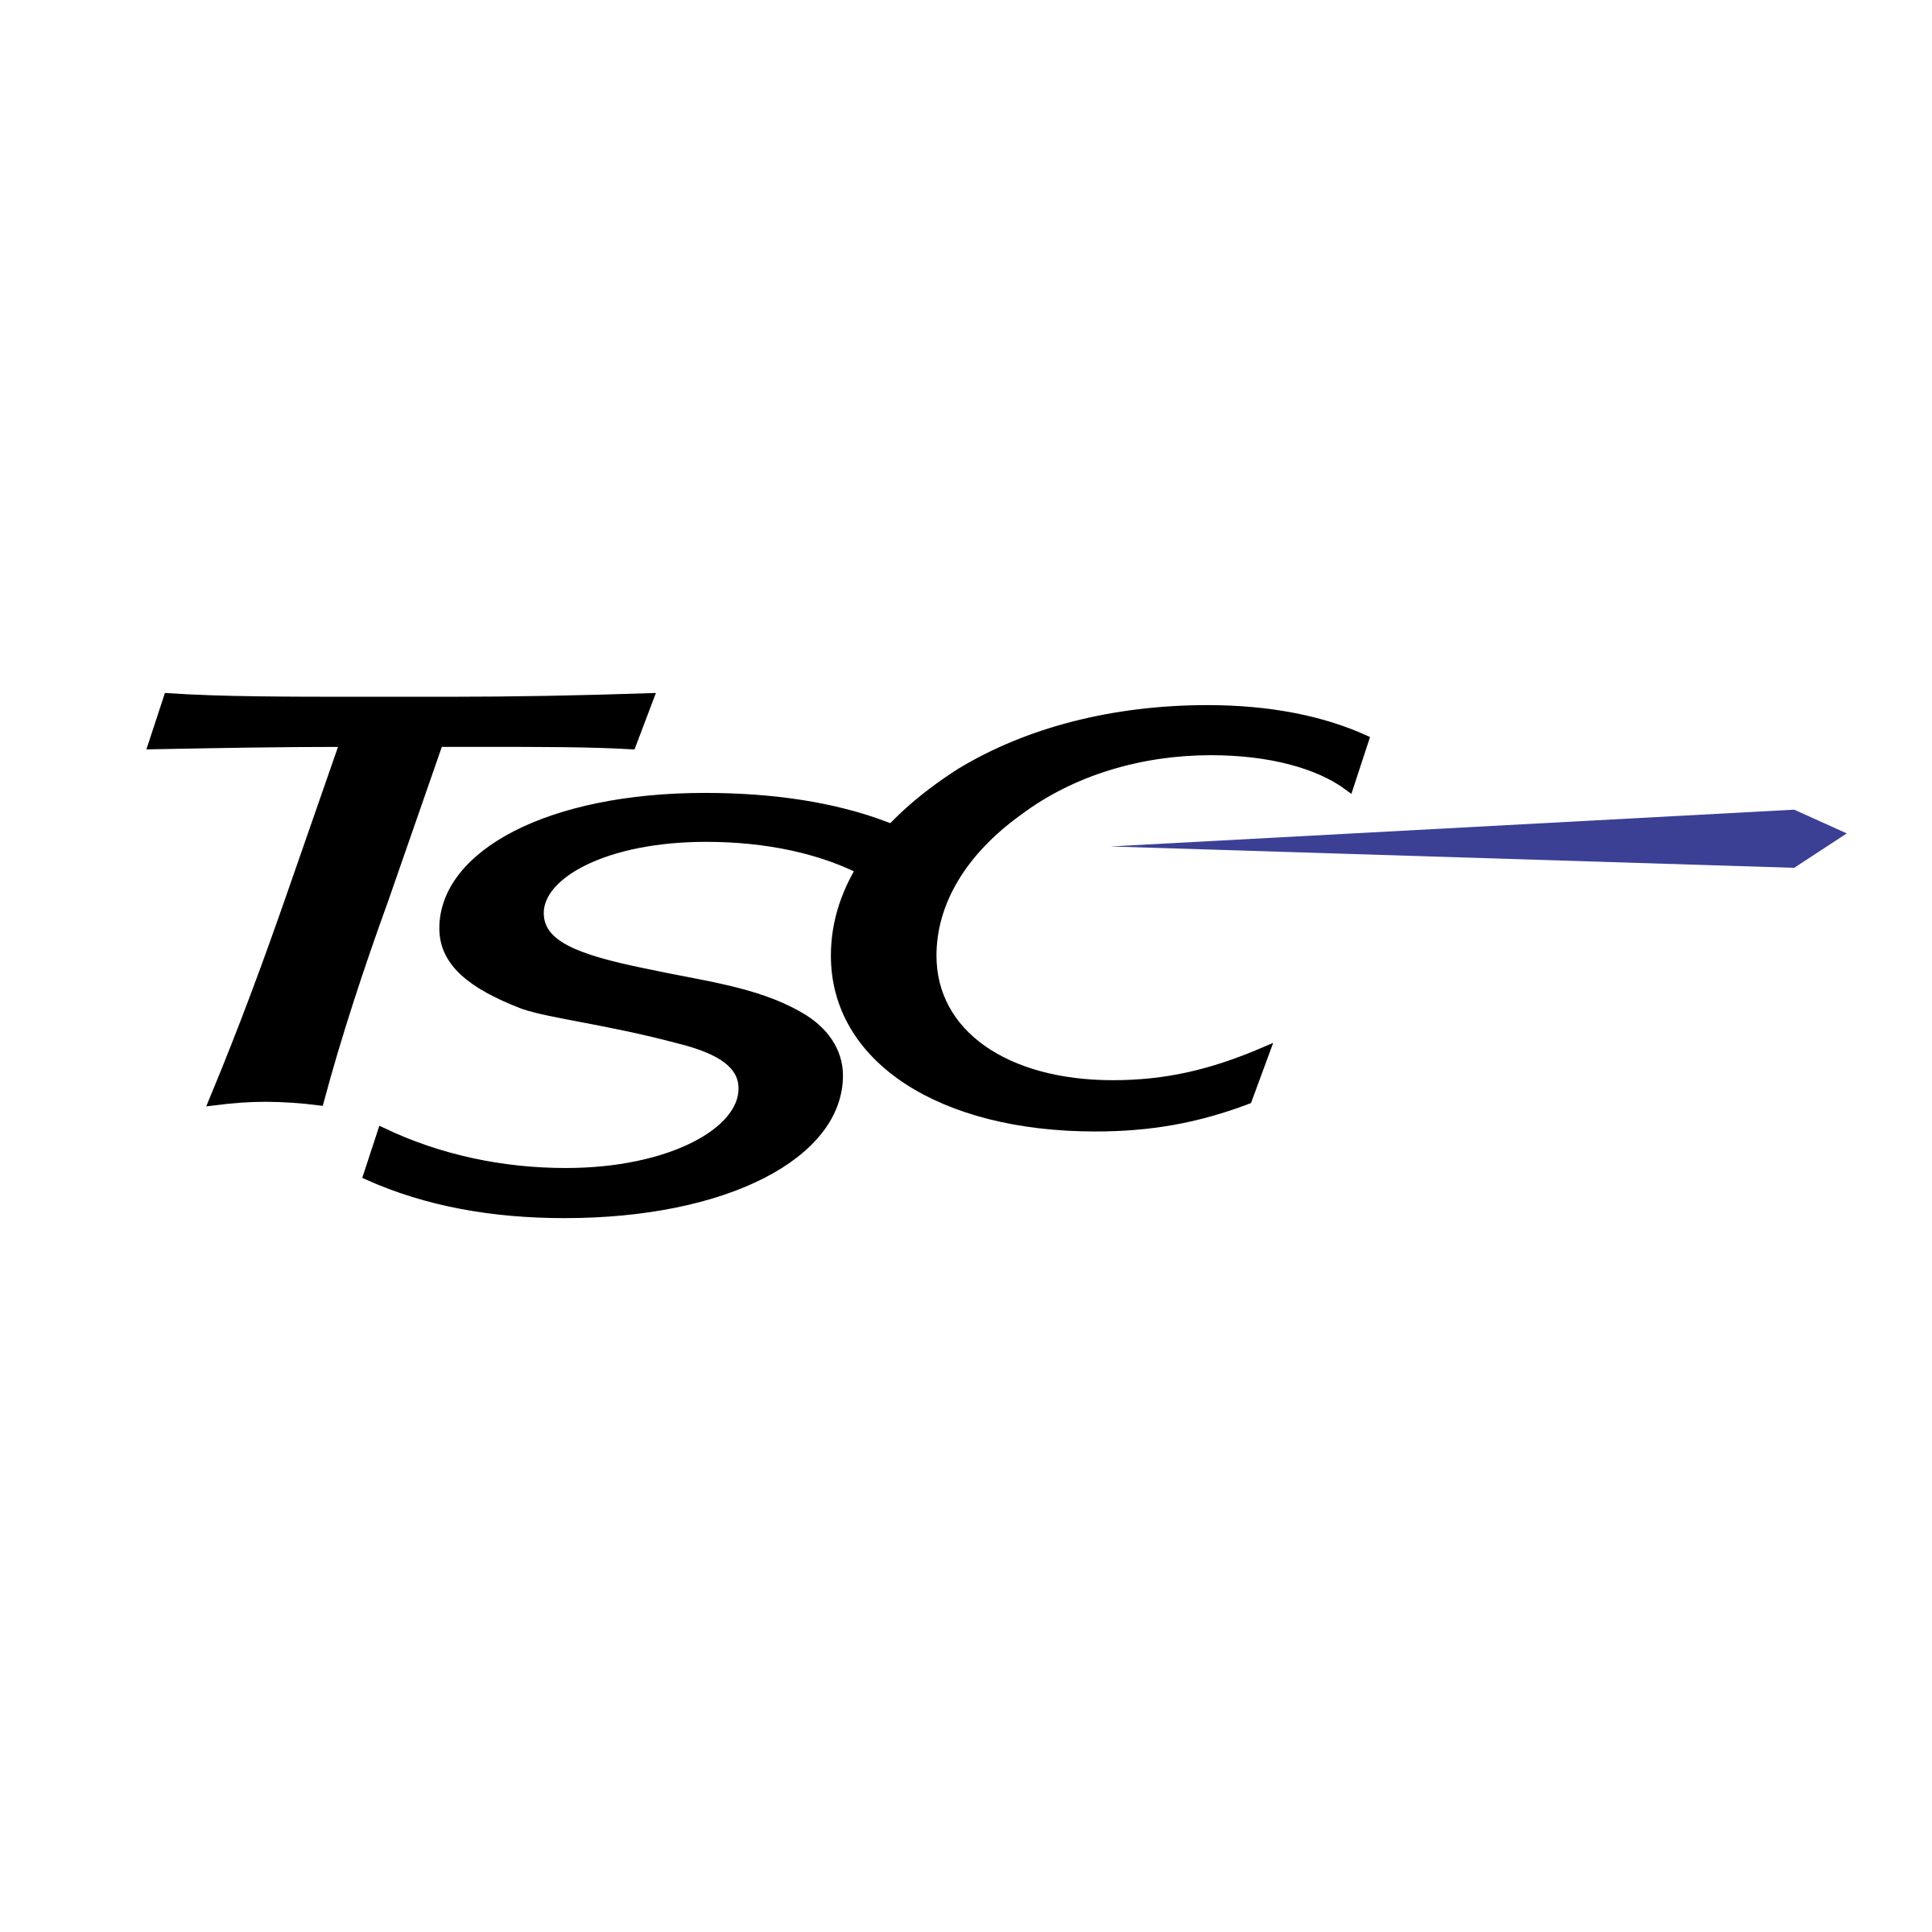 TSC Logo - TSC Logo PNG Transparent & SVG Vector - Freebie Supply